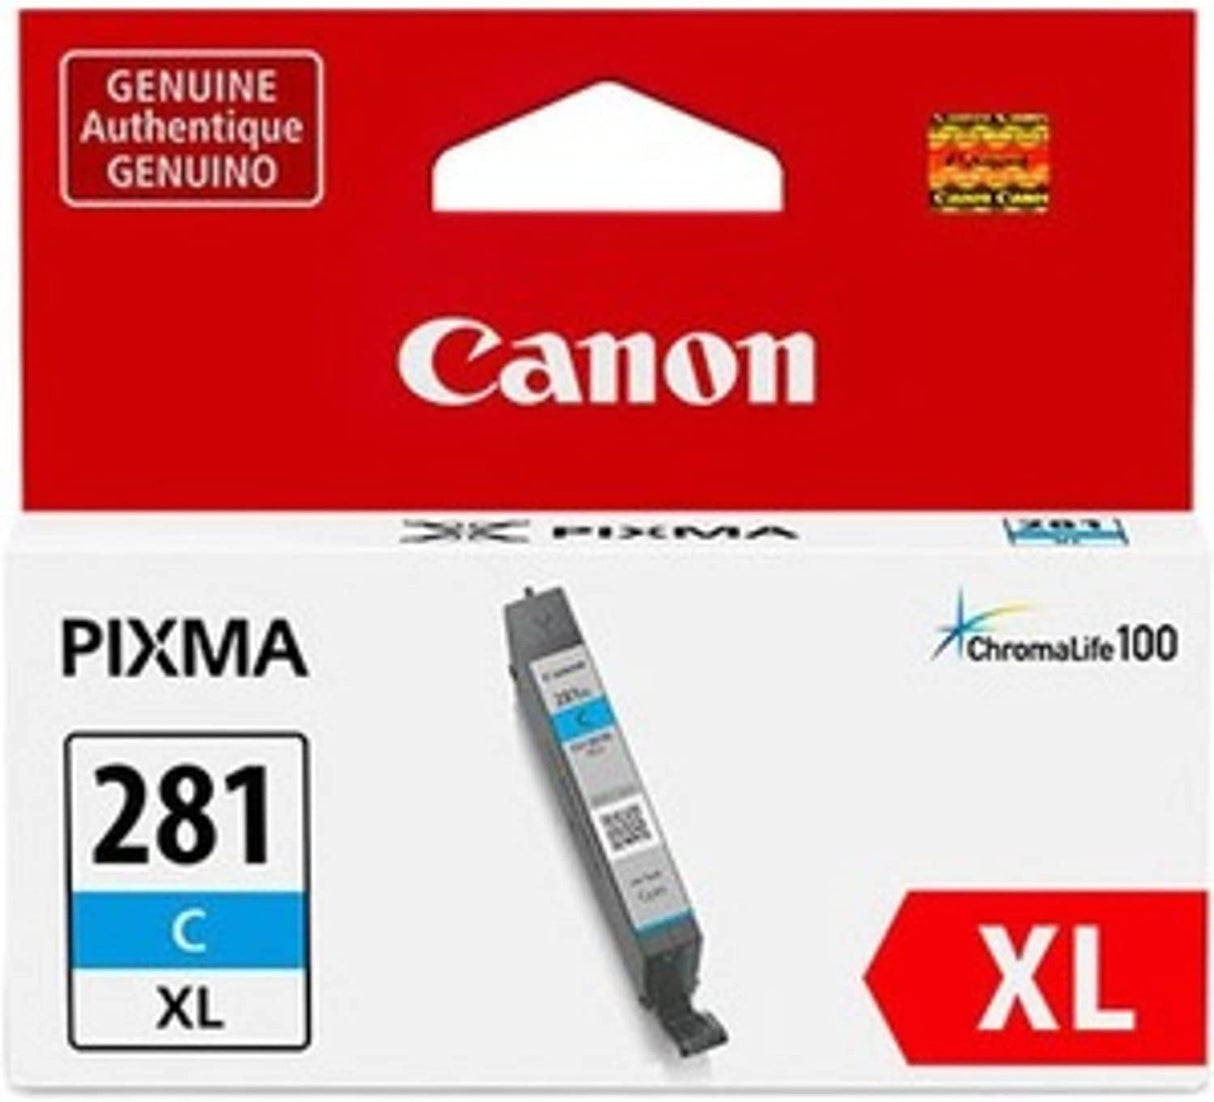 Canon CLI-281XL CYAN Compatible to TR7520,TR8520,TR8620,TS6120,TS6220,TS6320,TS702,TS8120,TS8220,TS8320,TS9120,TS9520 Printers Cyan XL Ink